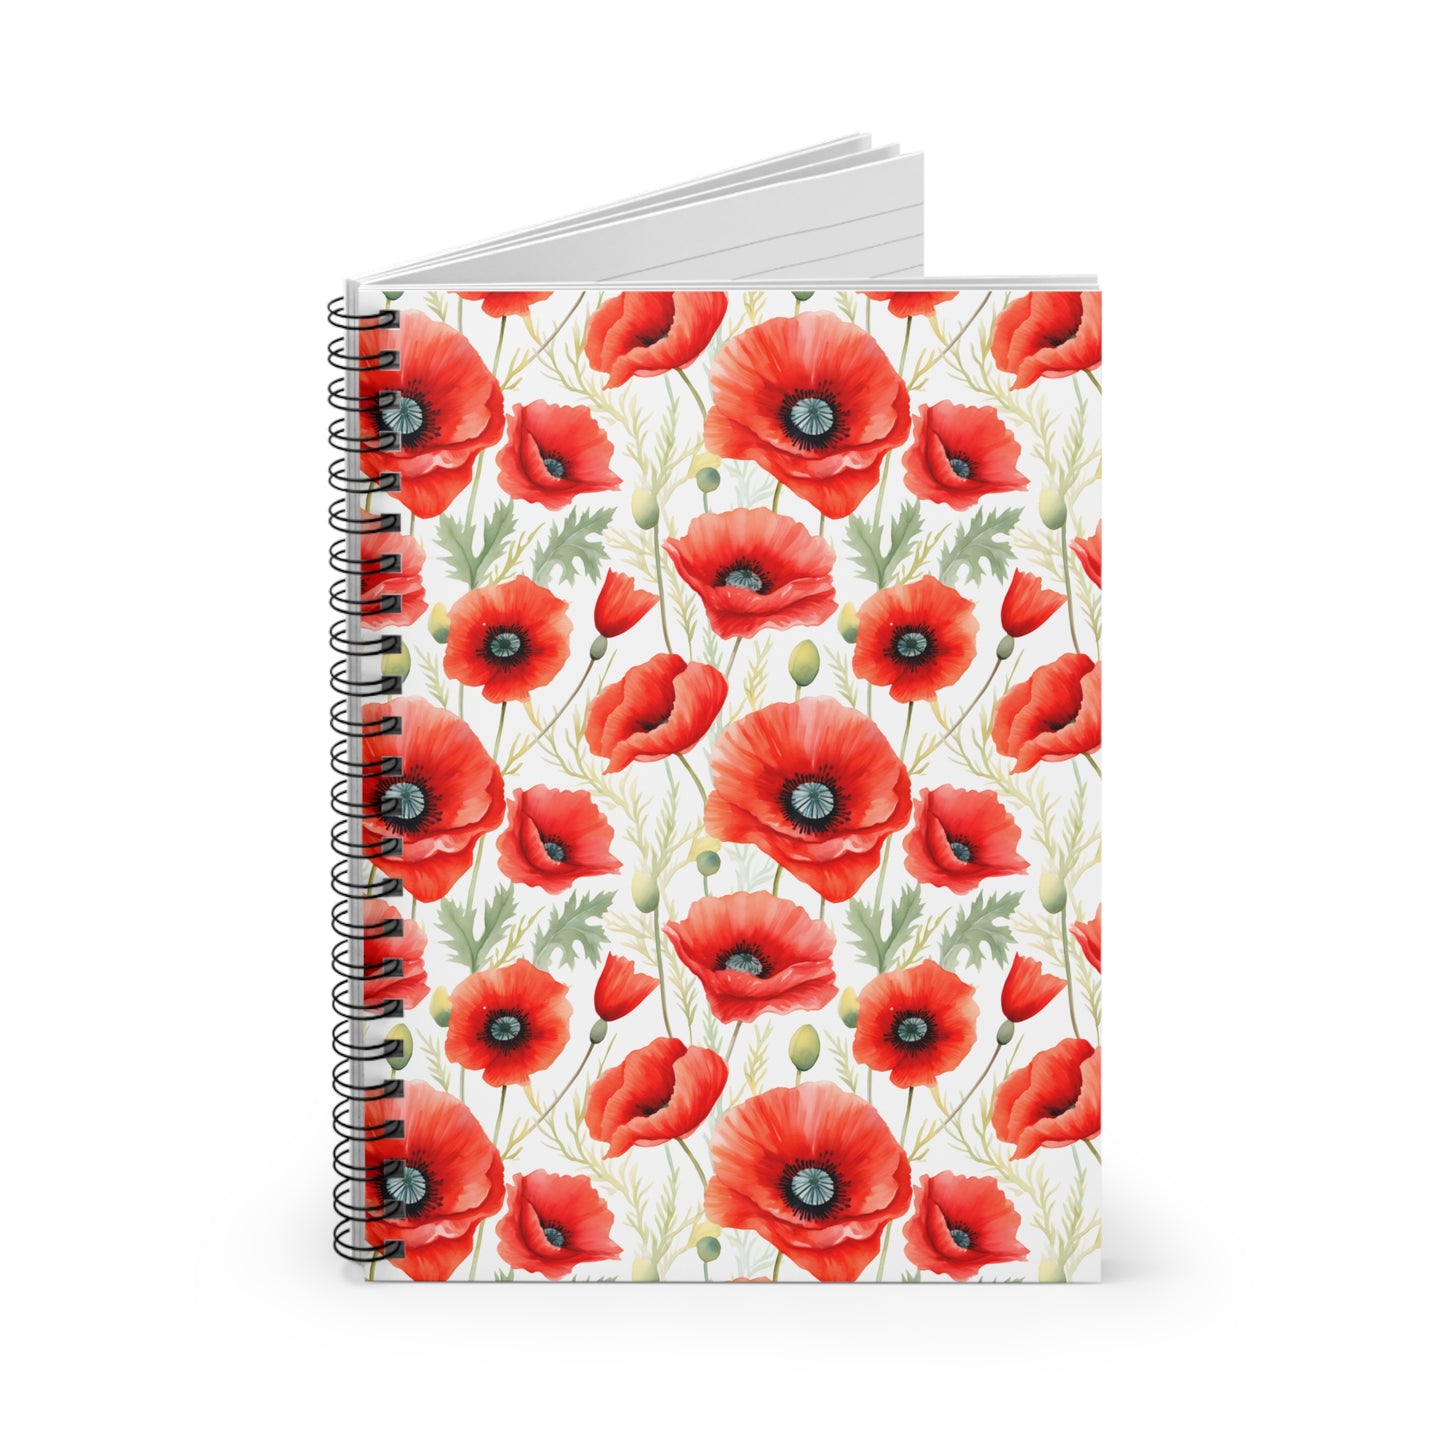 English Garden Poppy Spiral Notebook - Ruled Line (6" x 8")